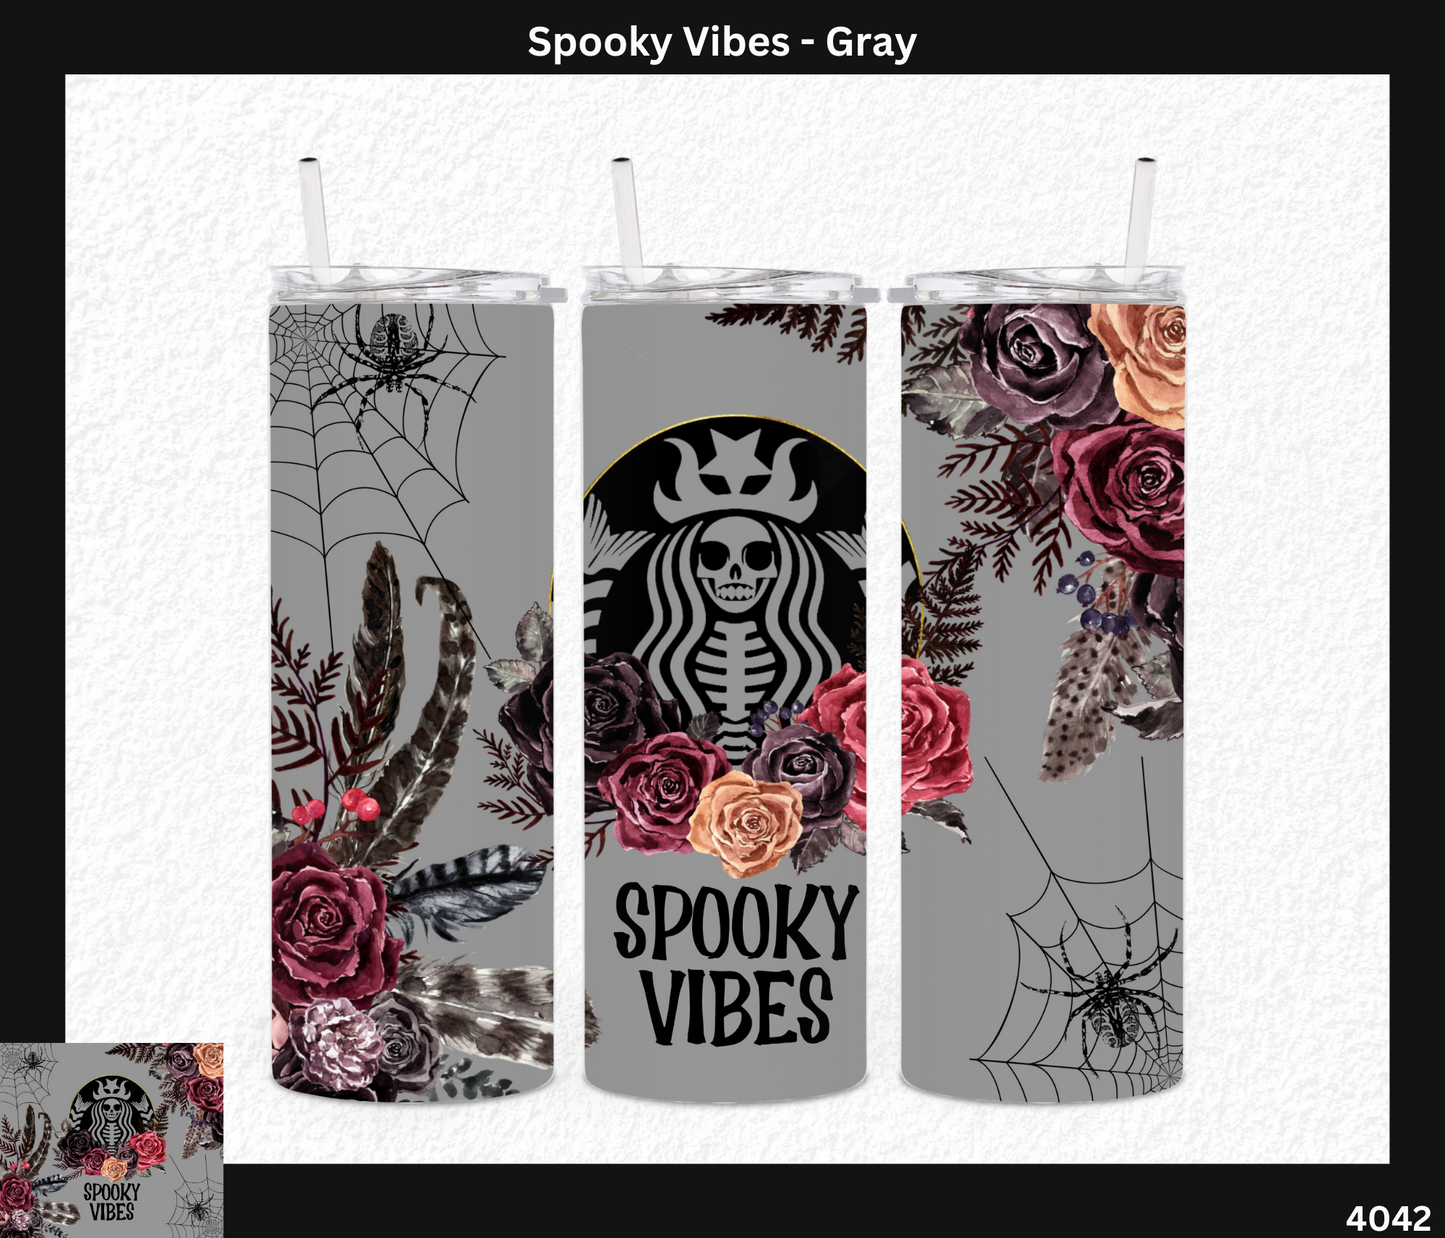 Spooky Vibes - Gray